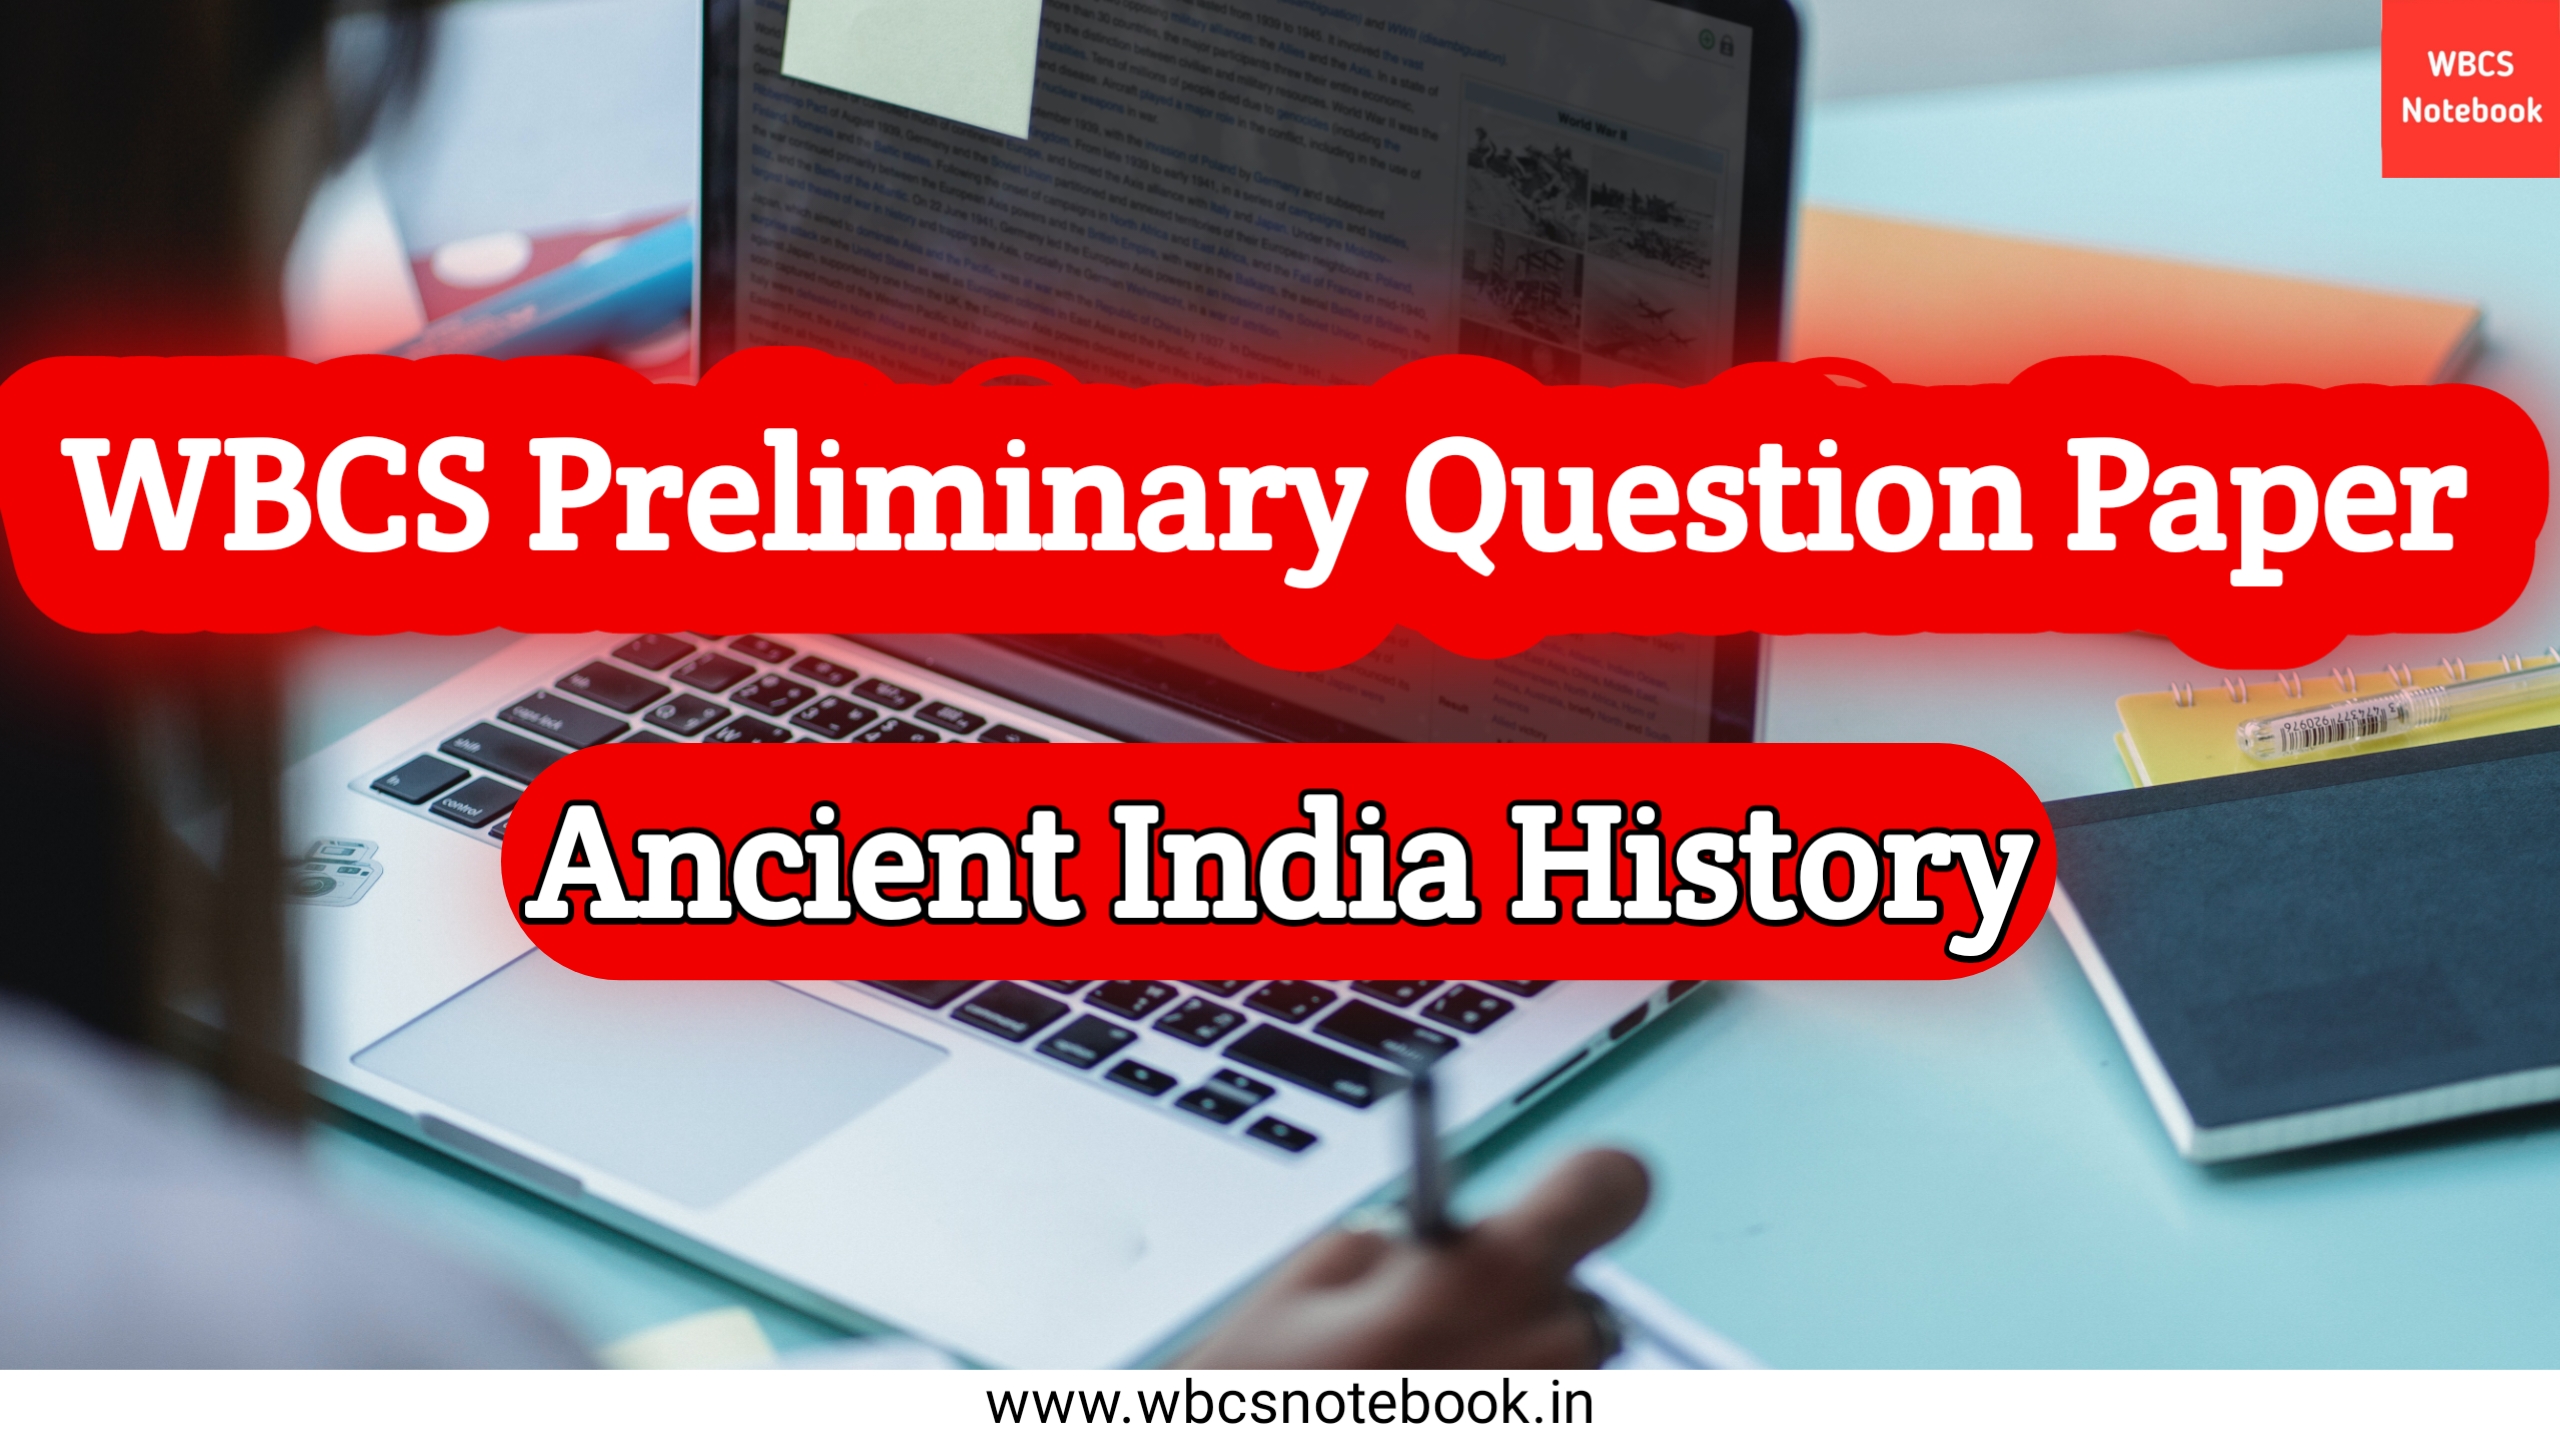 Ancient India History WBCS Preliminary Question Paper